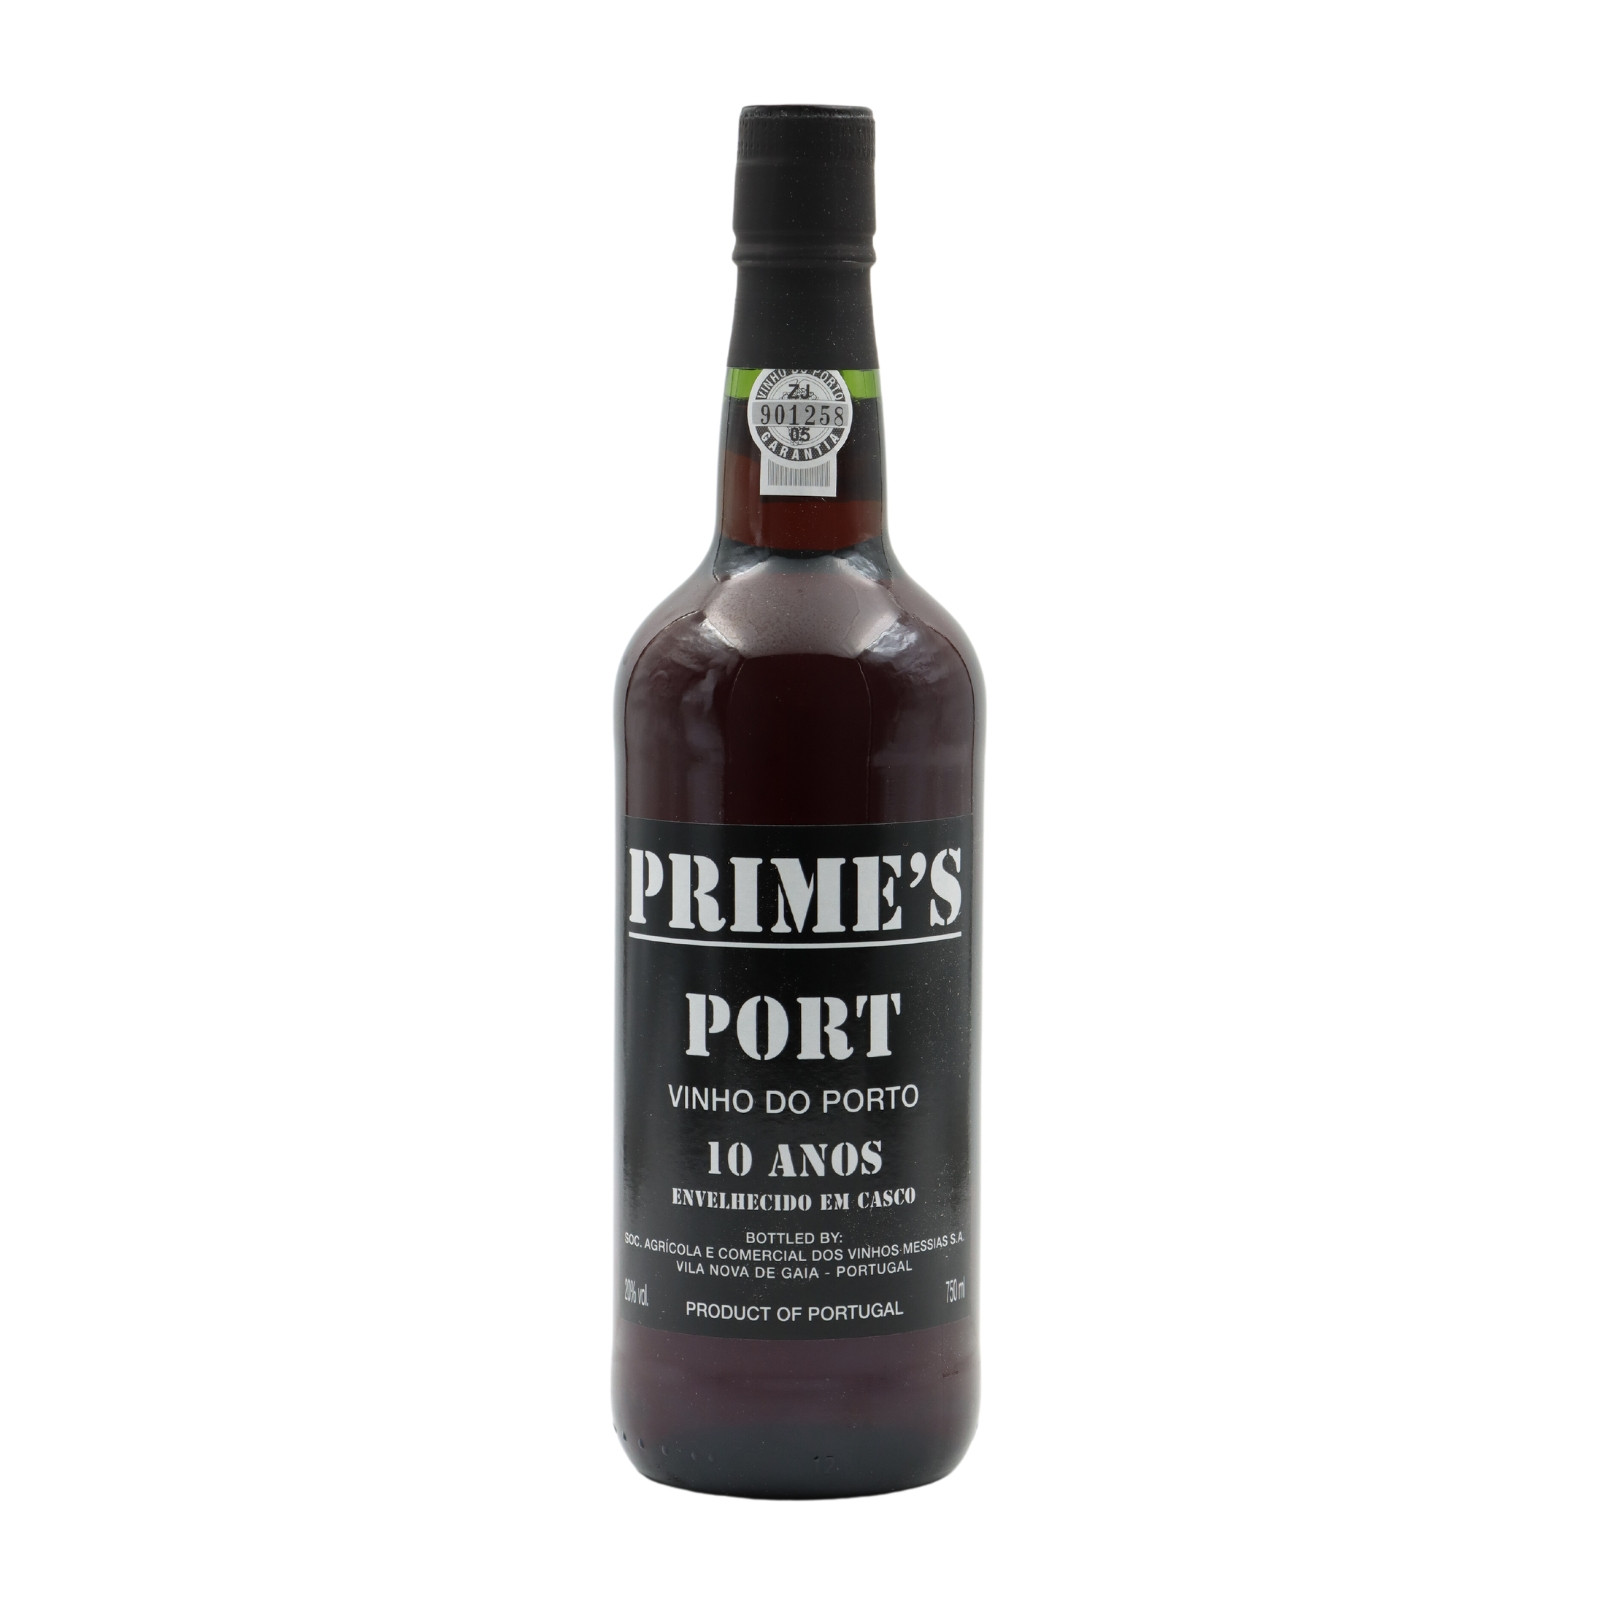 Primes 10 years Tawny Port